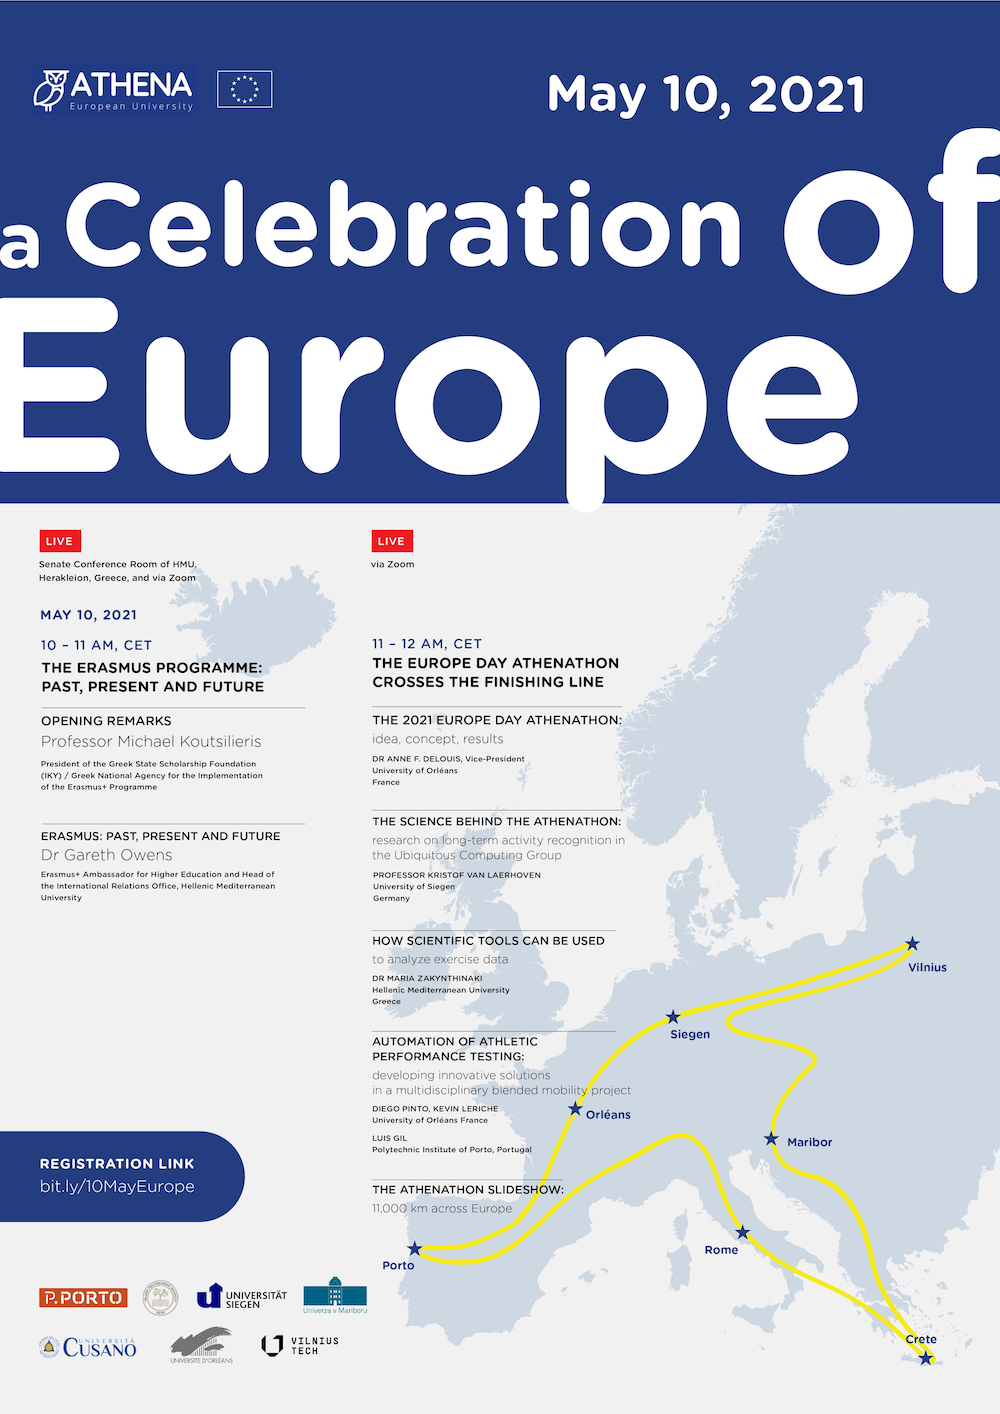 DEG_BRI_ATHENA_CelebrationOfEurope_2021